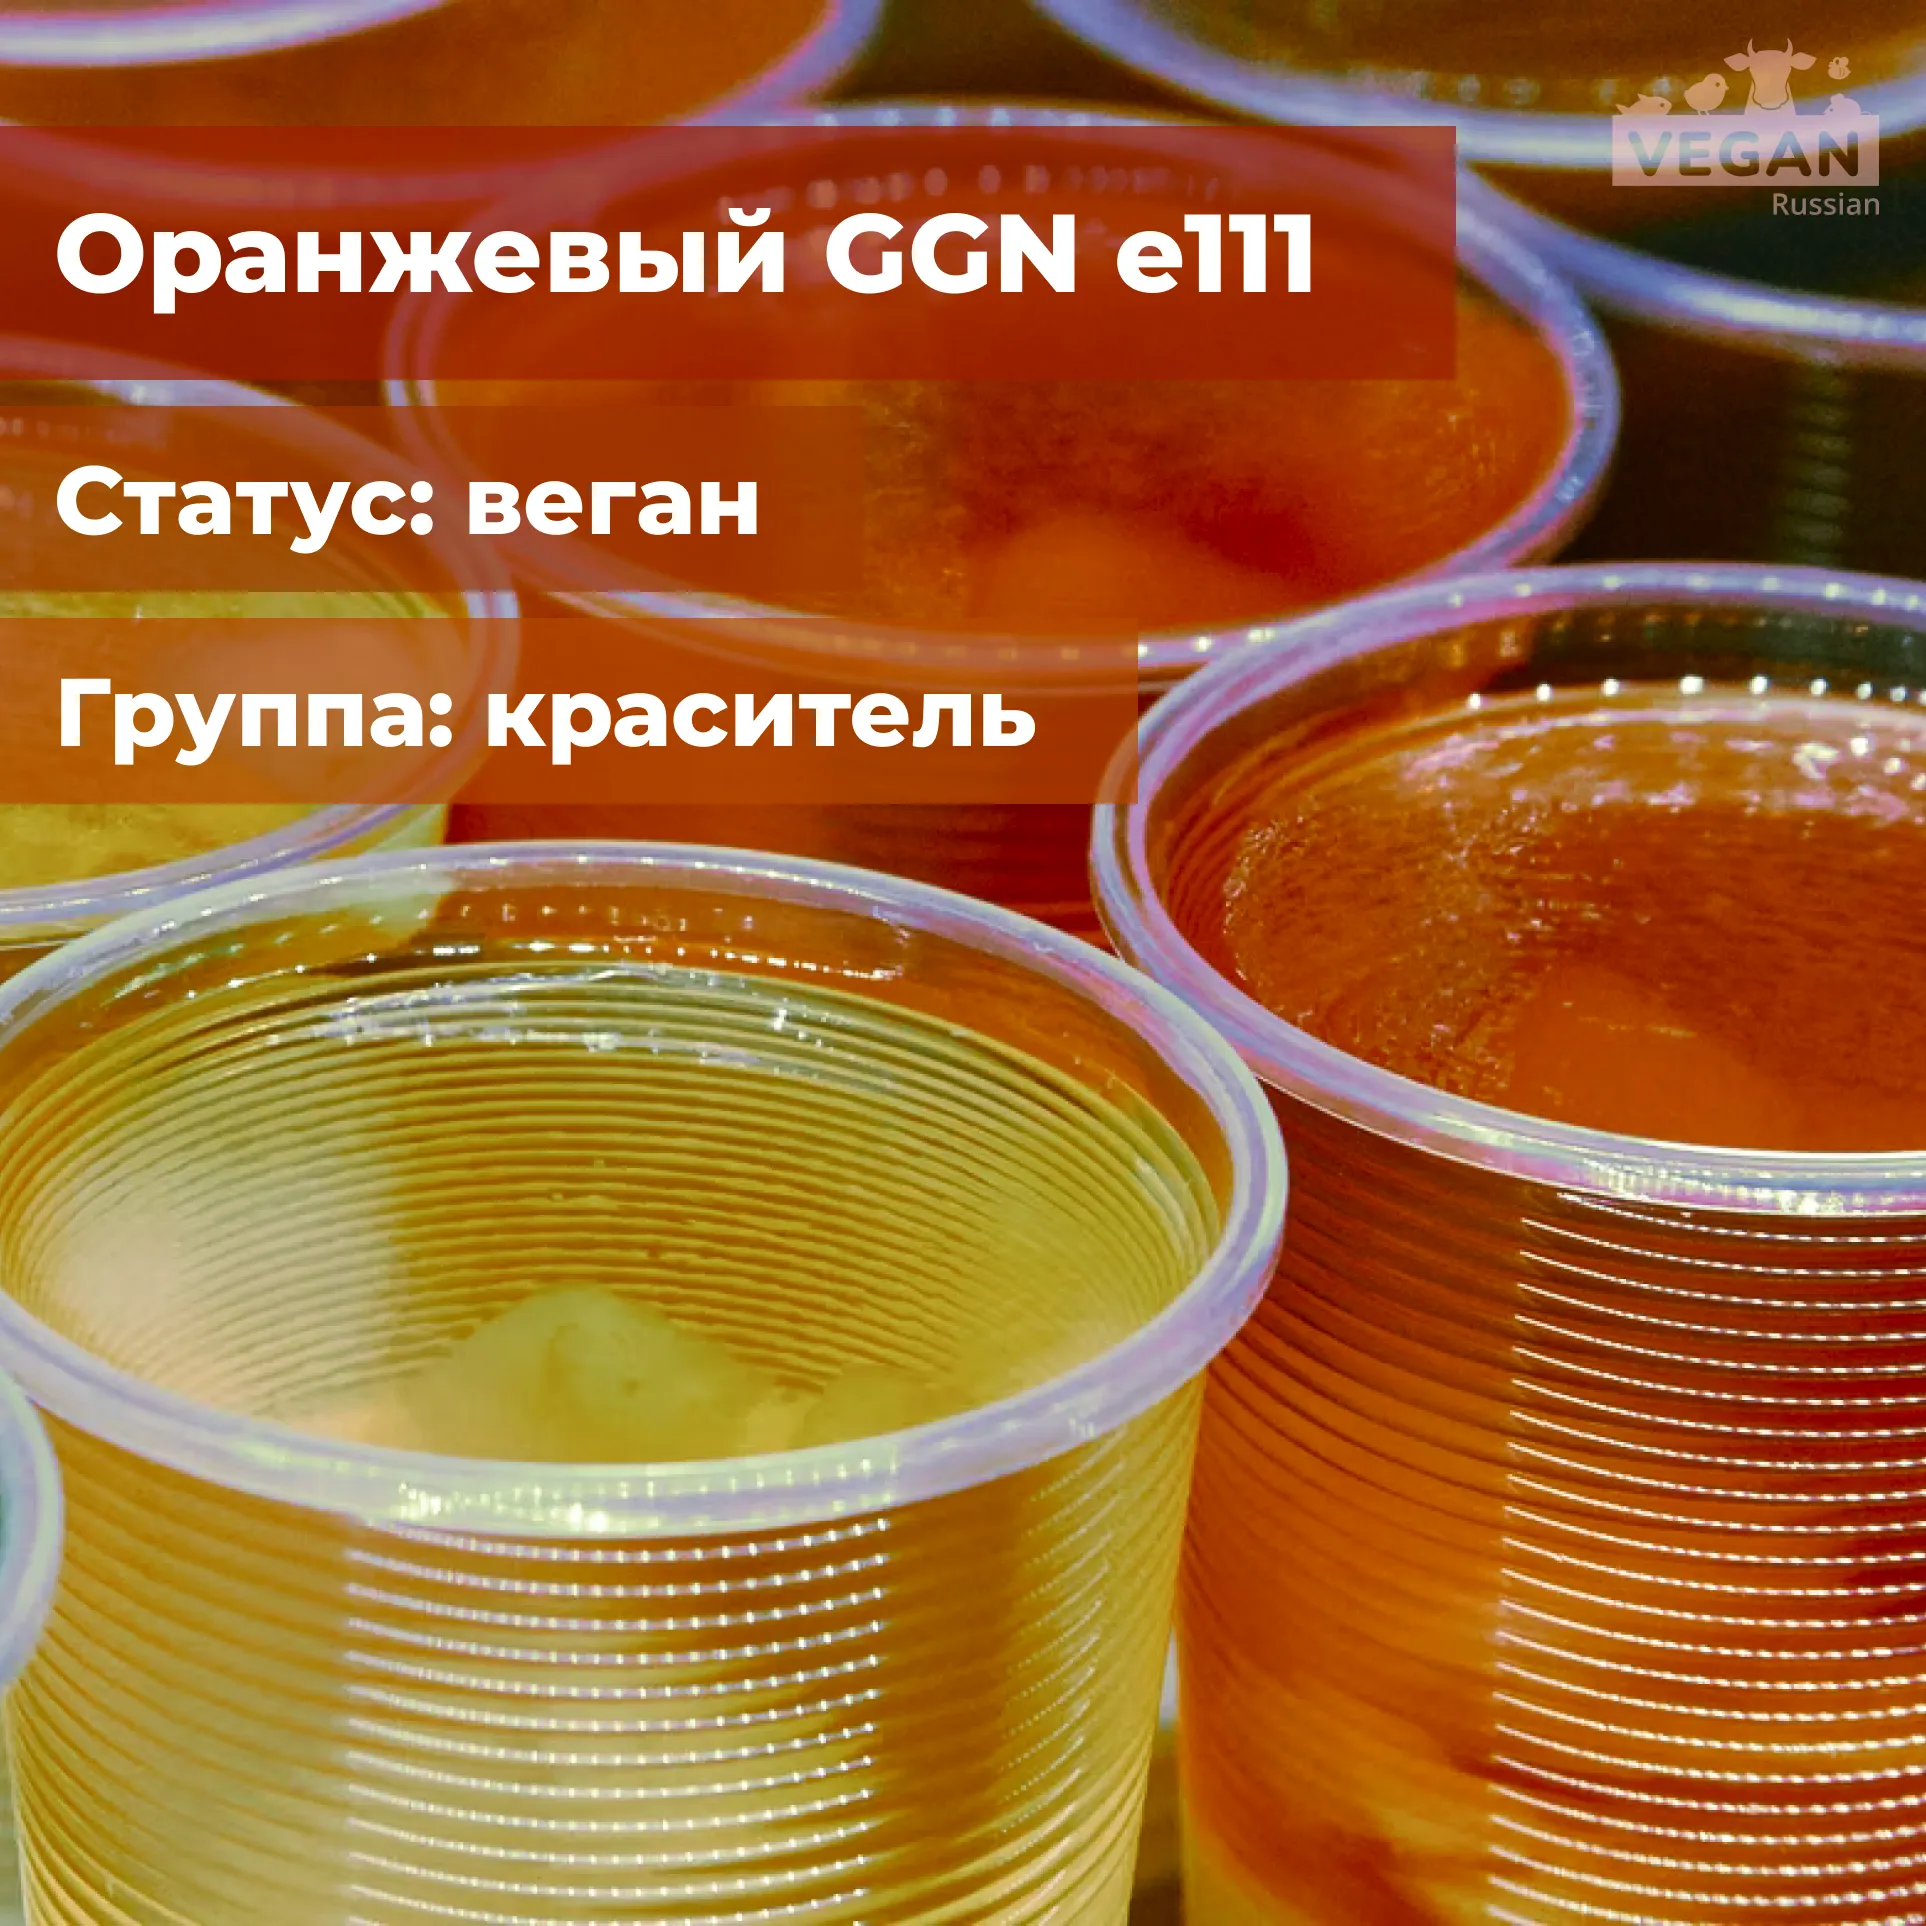 Оранжевый GGN е111